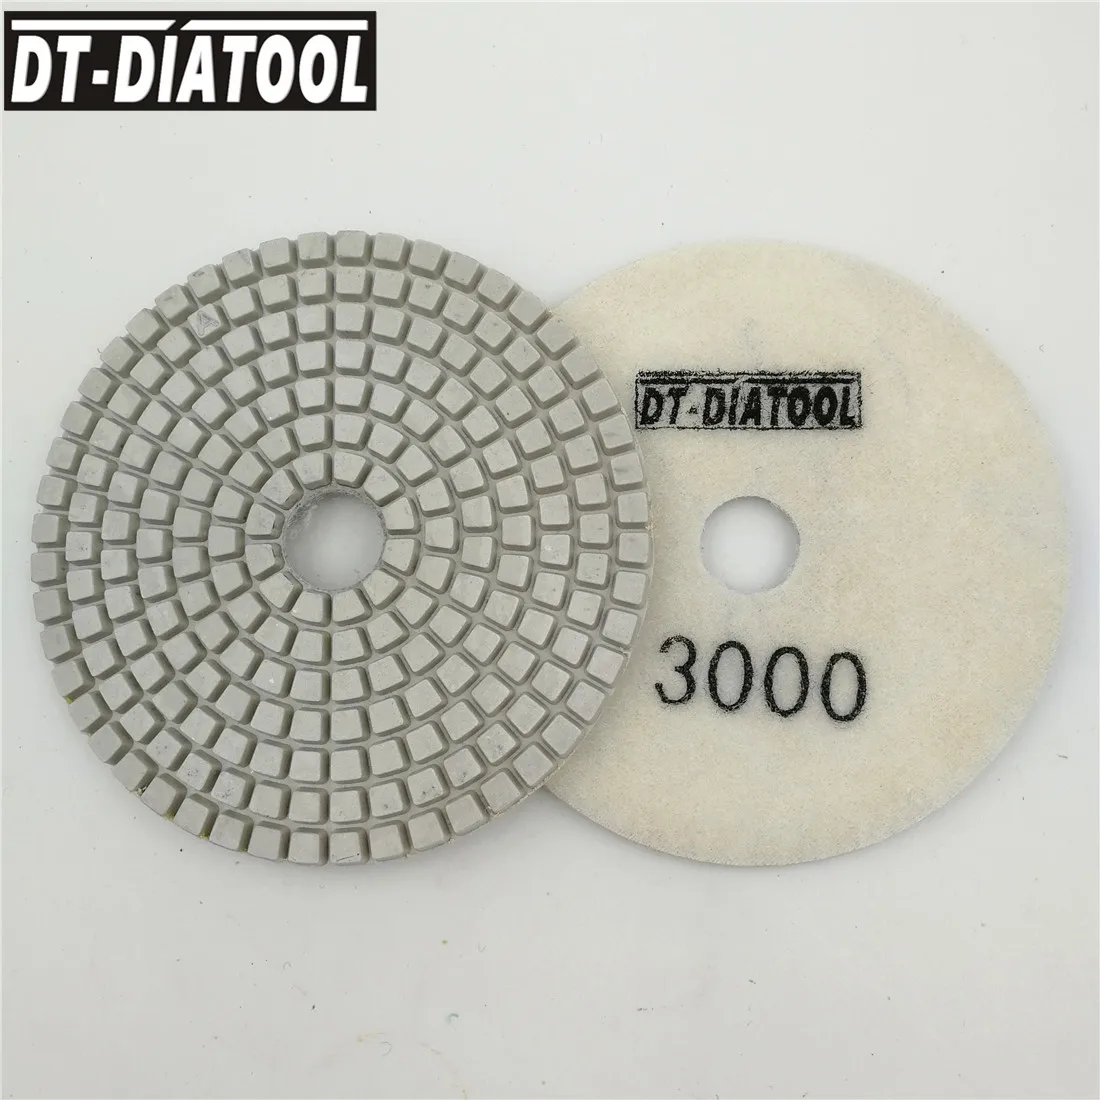 

DT-DIATOOL 10pcs Diameter 4"/100mm Diamond Wet Polishing Pads #3000 White Resin Bond Natural Stone Granite Marble Sanding Discs